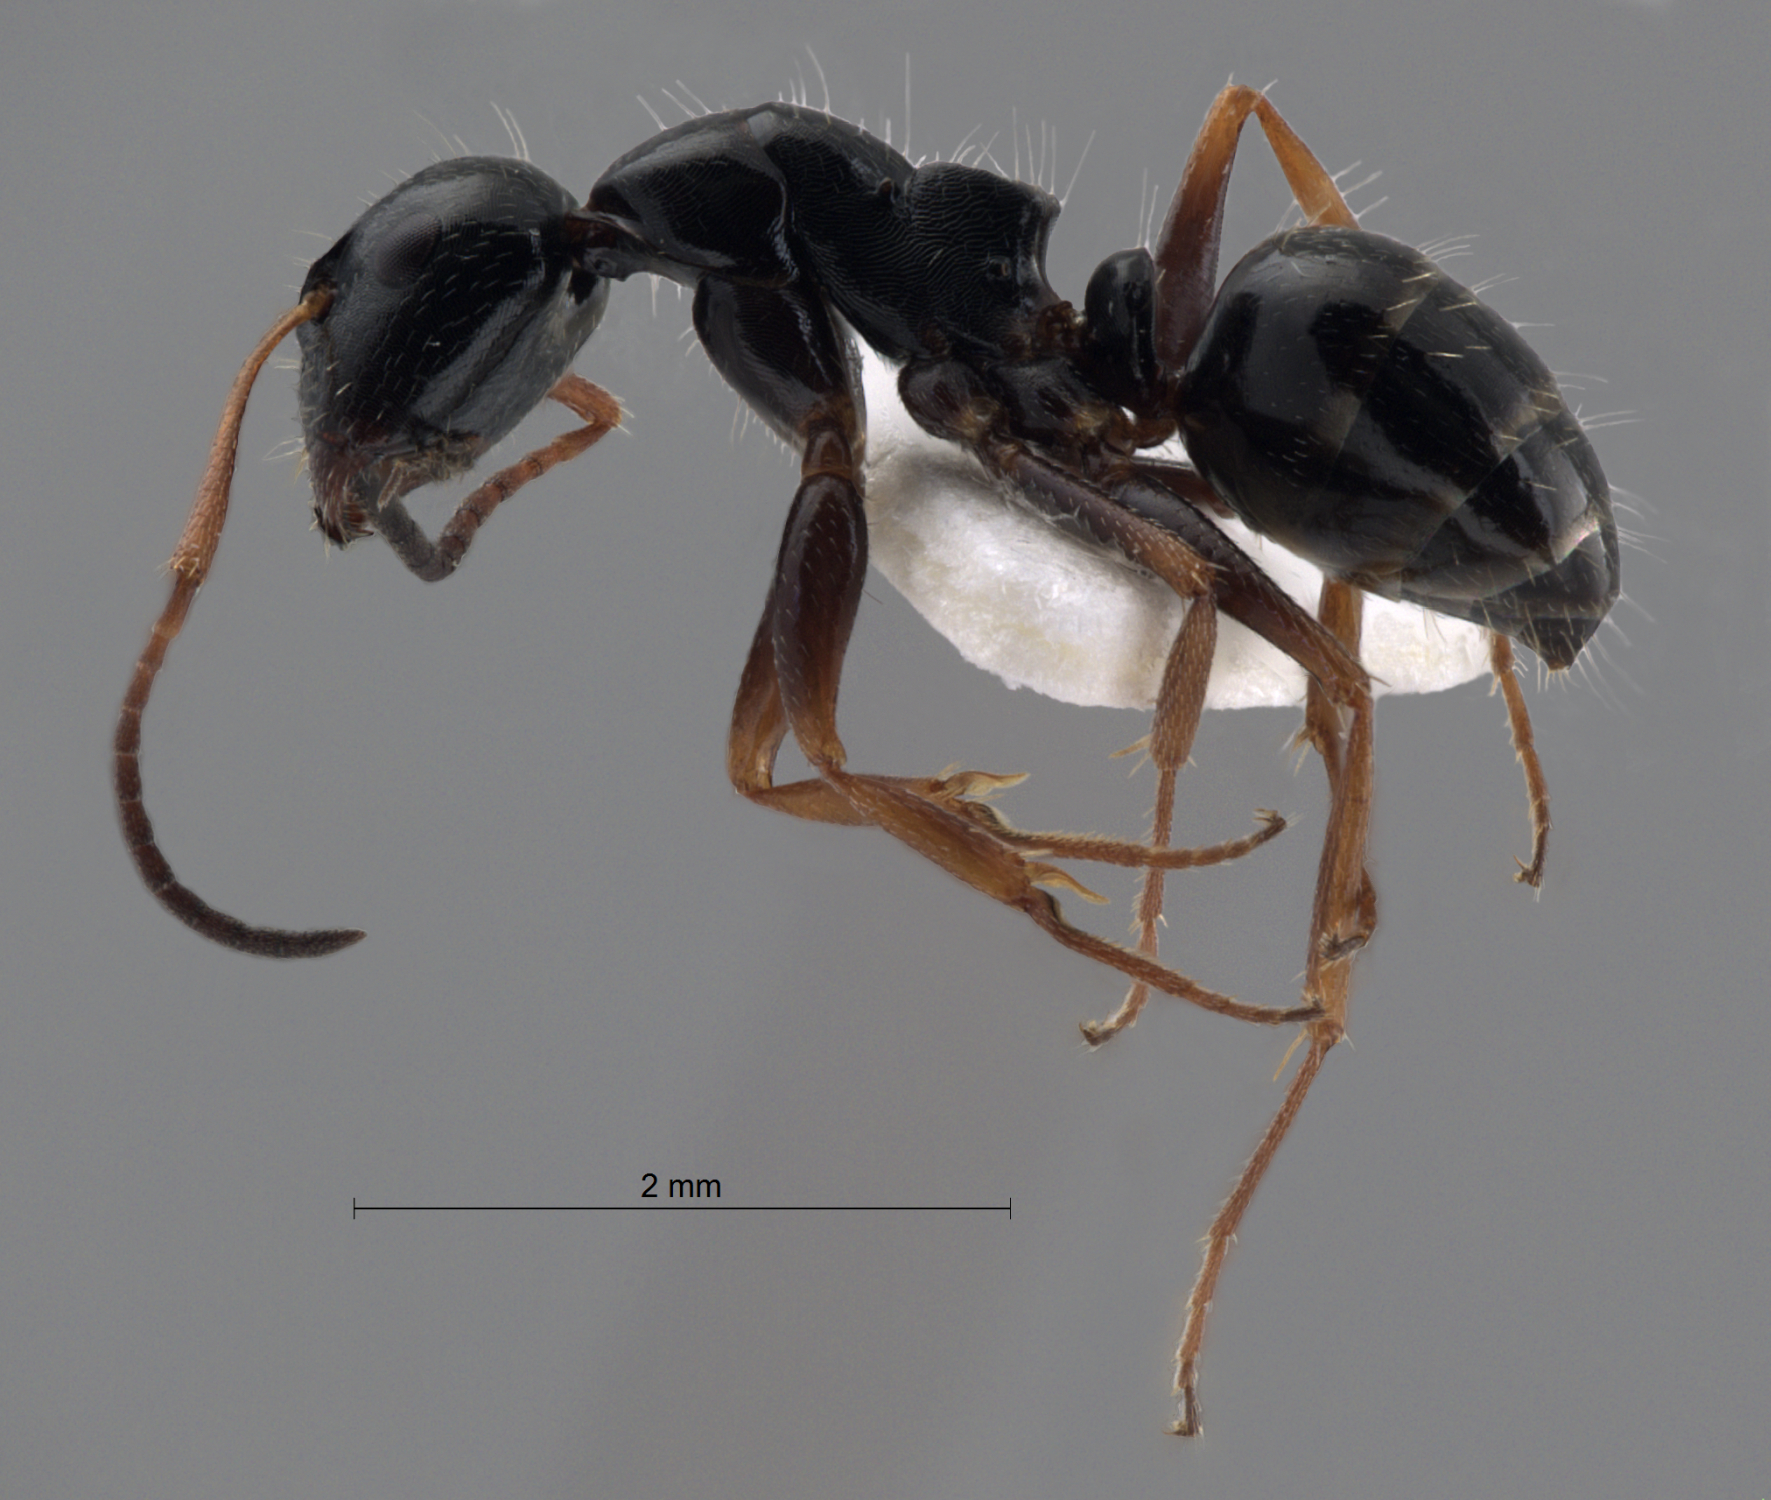  Camponotus piceus lateral